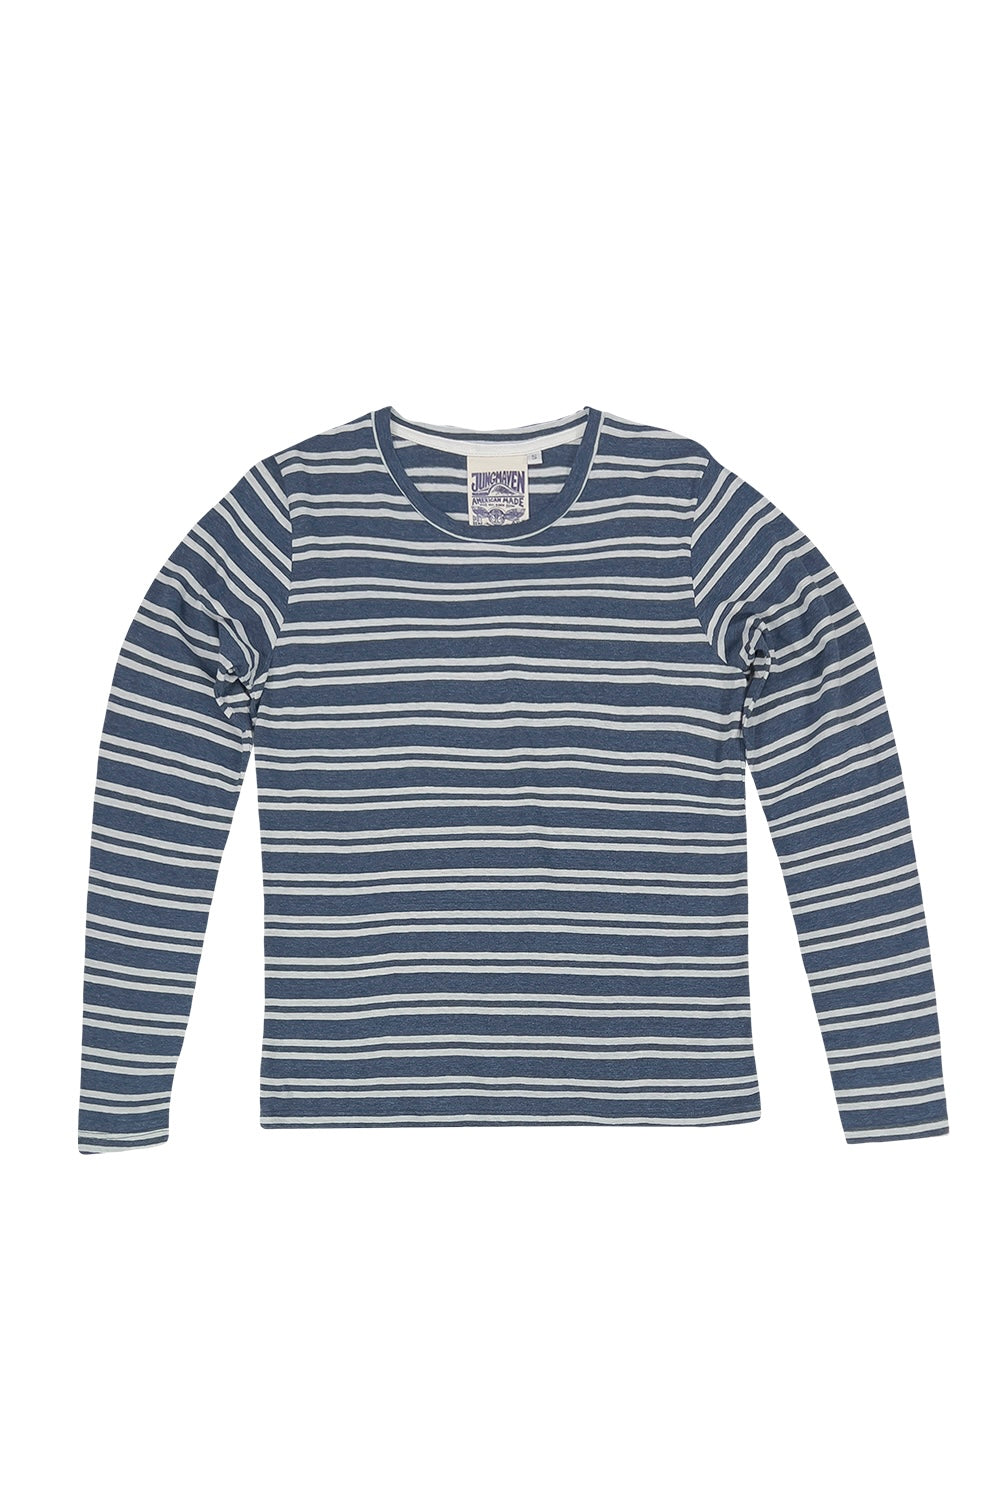 Stripe Encanto Long Sleeve Tee | Jungmaven Hemp Clothing & Accessories / Color:  Blue/White Stripe